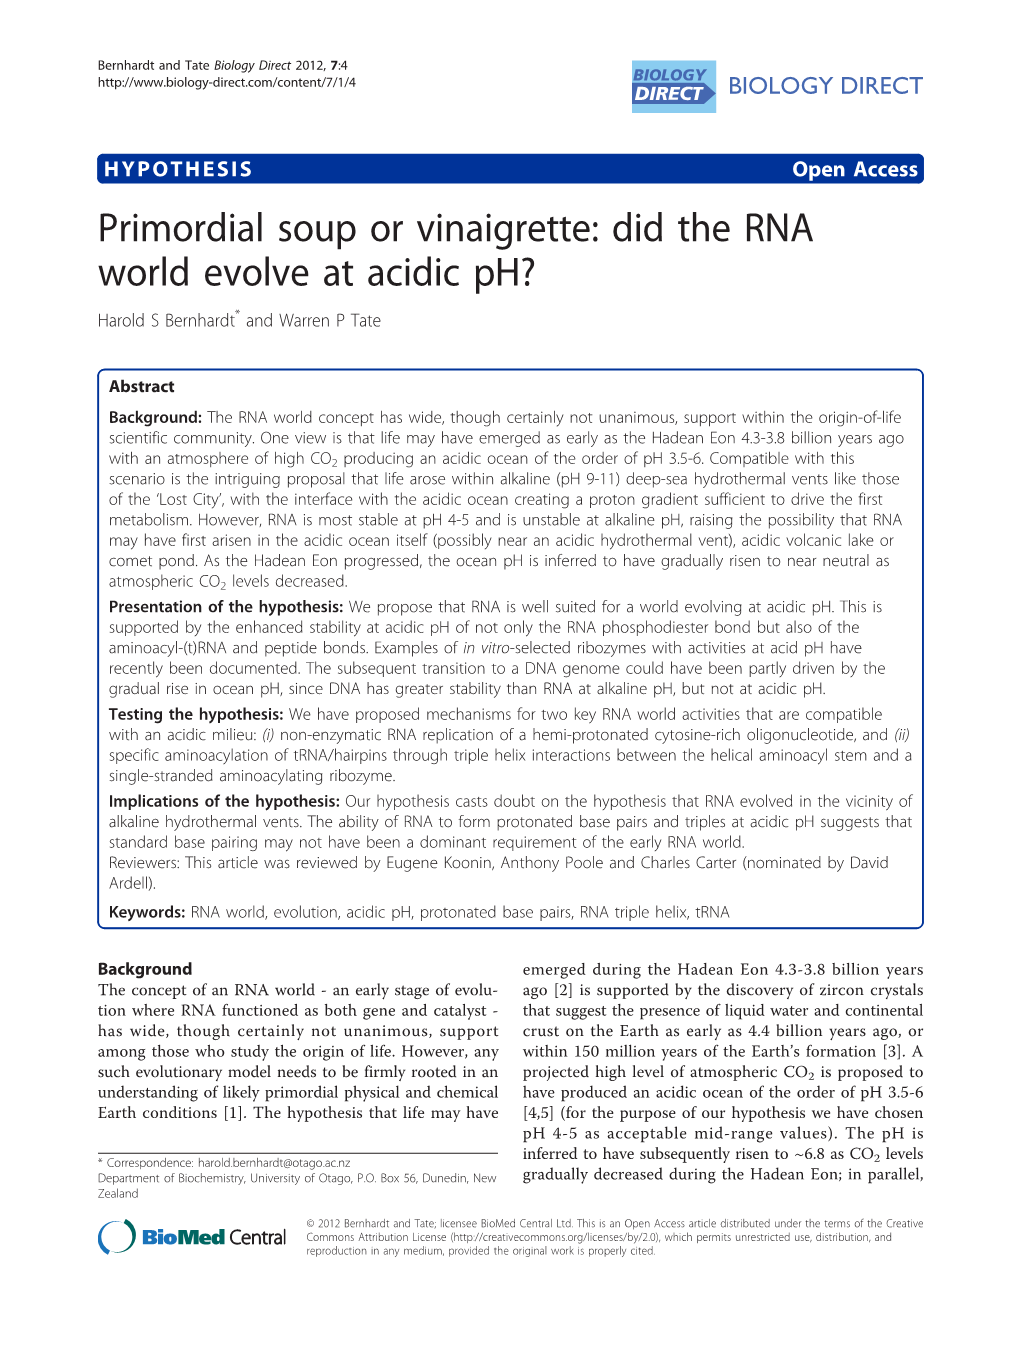 Primordial Soup Or Vinaigrette: Did the RNA World Evolve at Acidic Ph? Harold S Bernhardt* and Warren P Tate